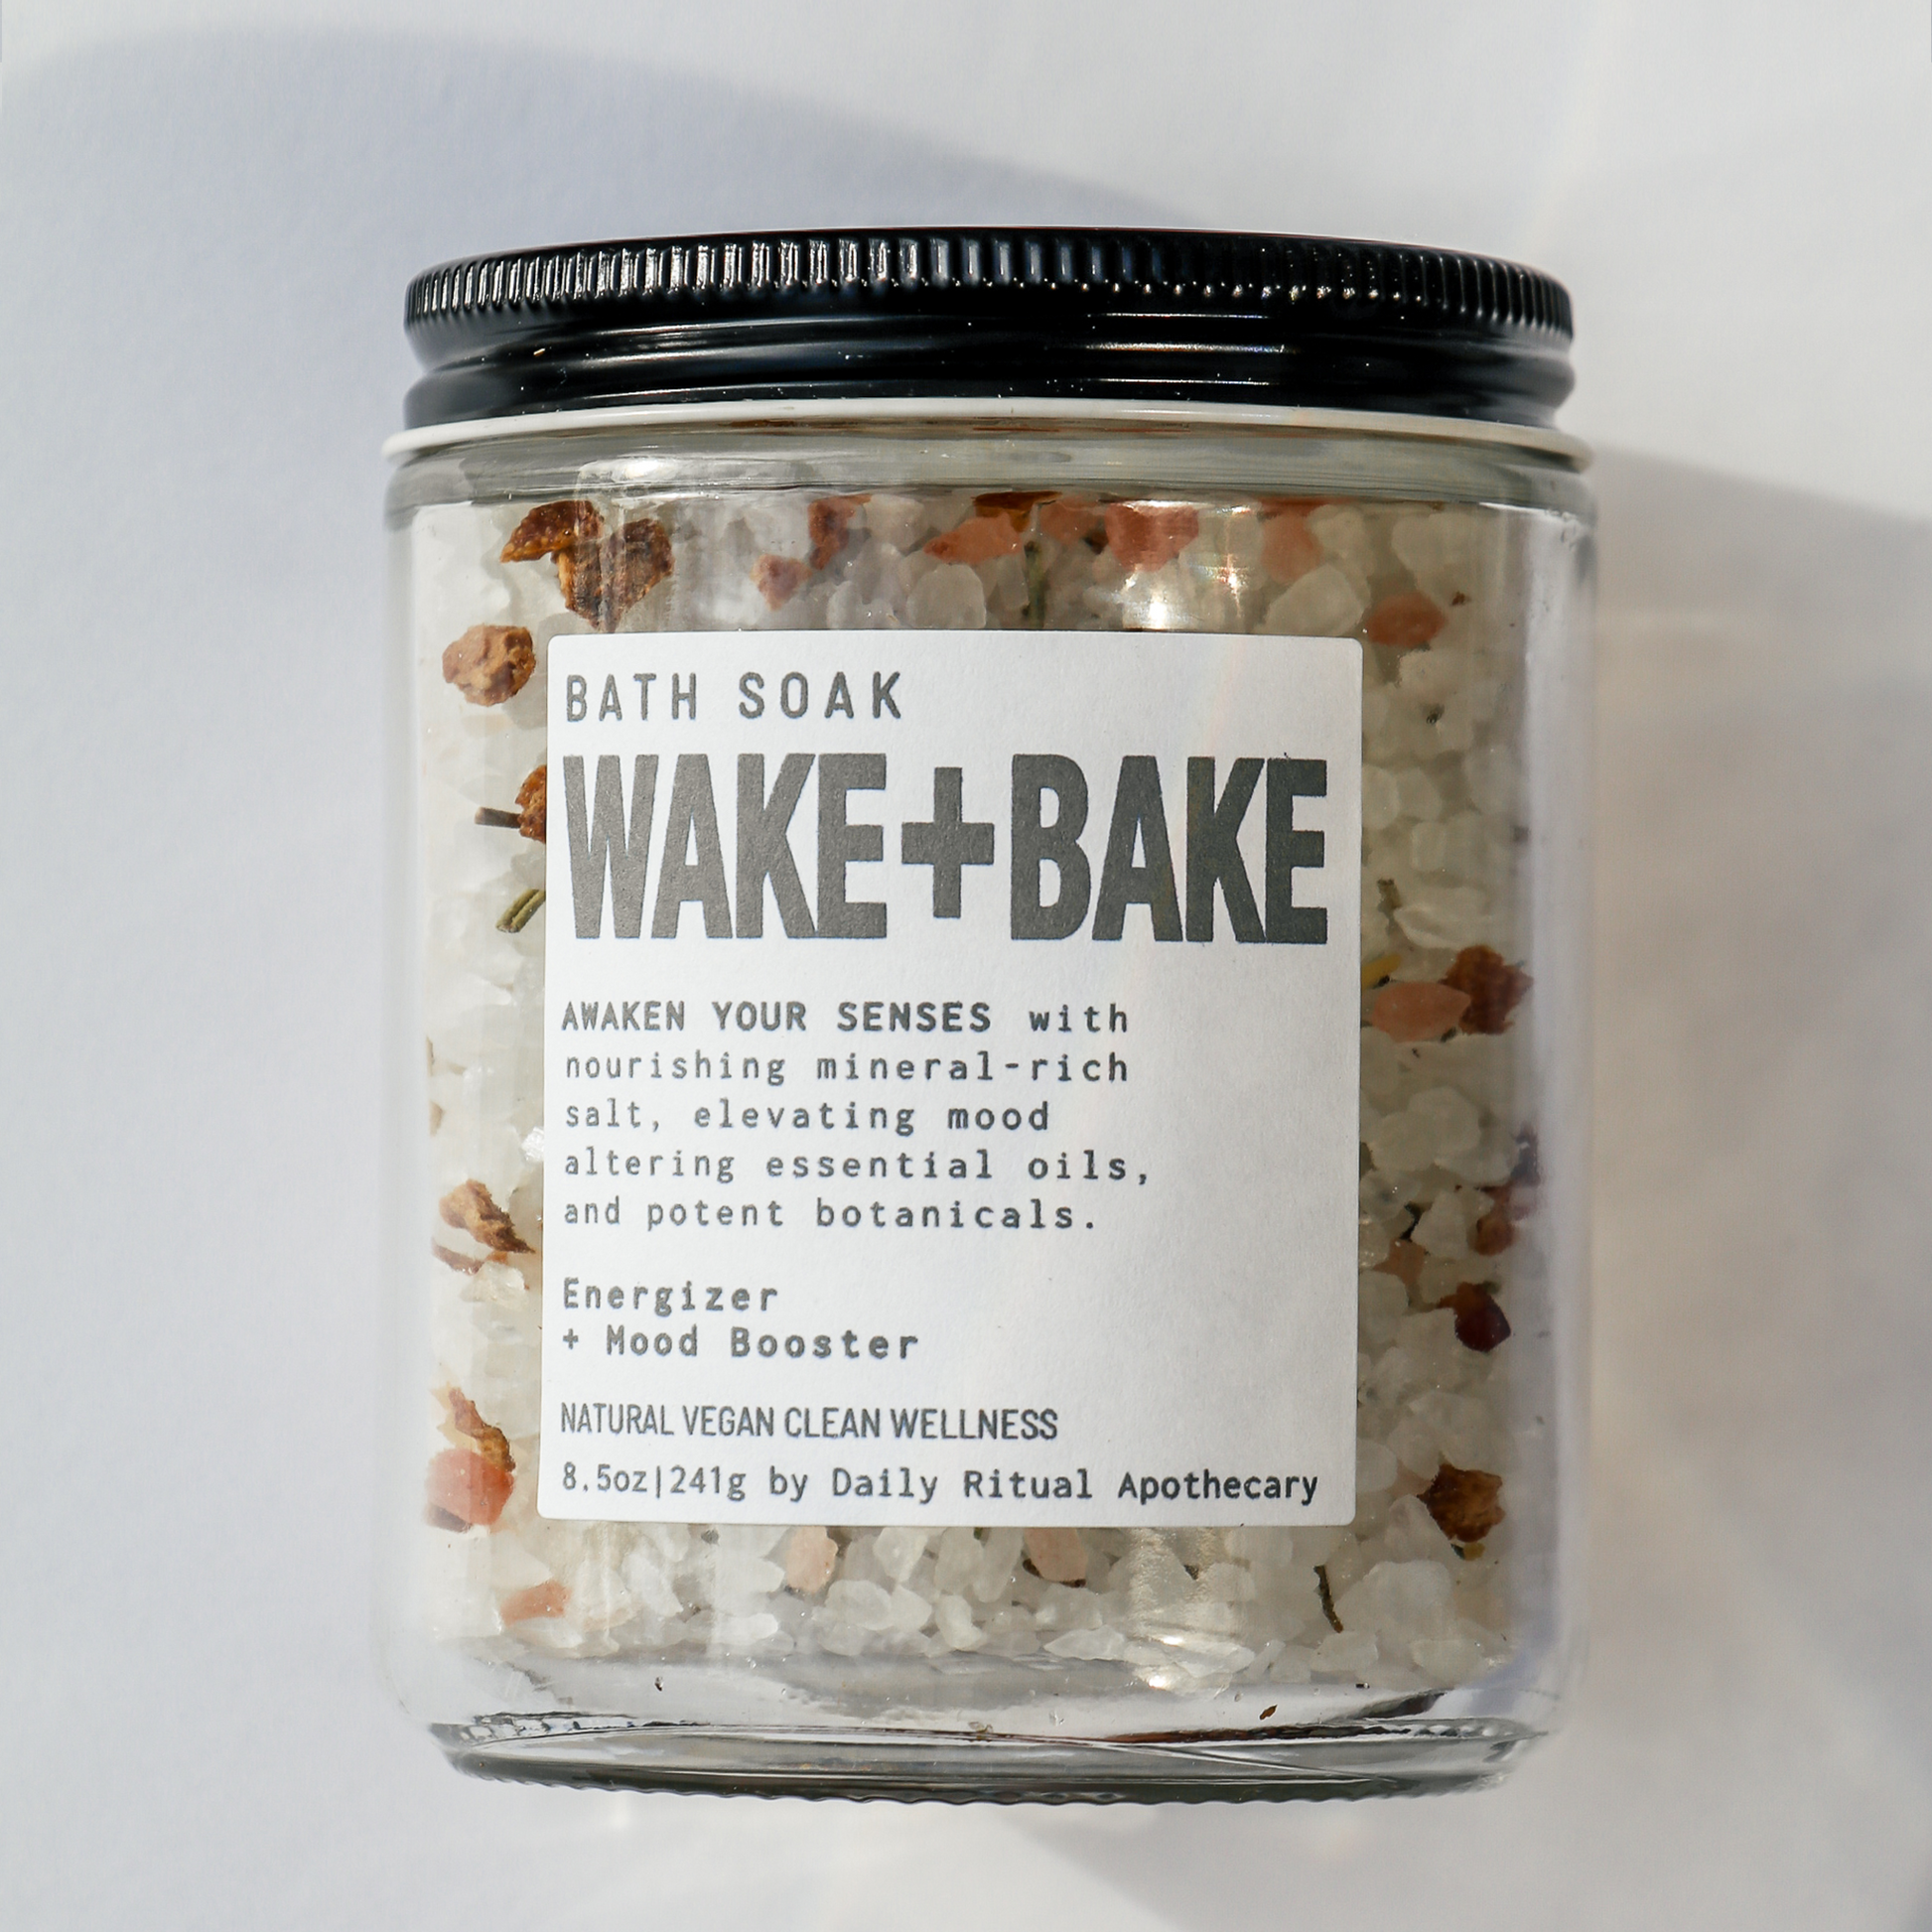 Wake + Bake Bath Soak - Daily Ritual Apothecary